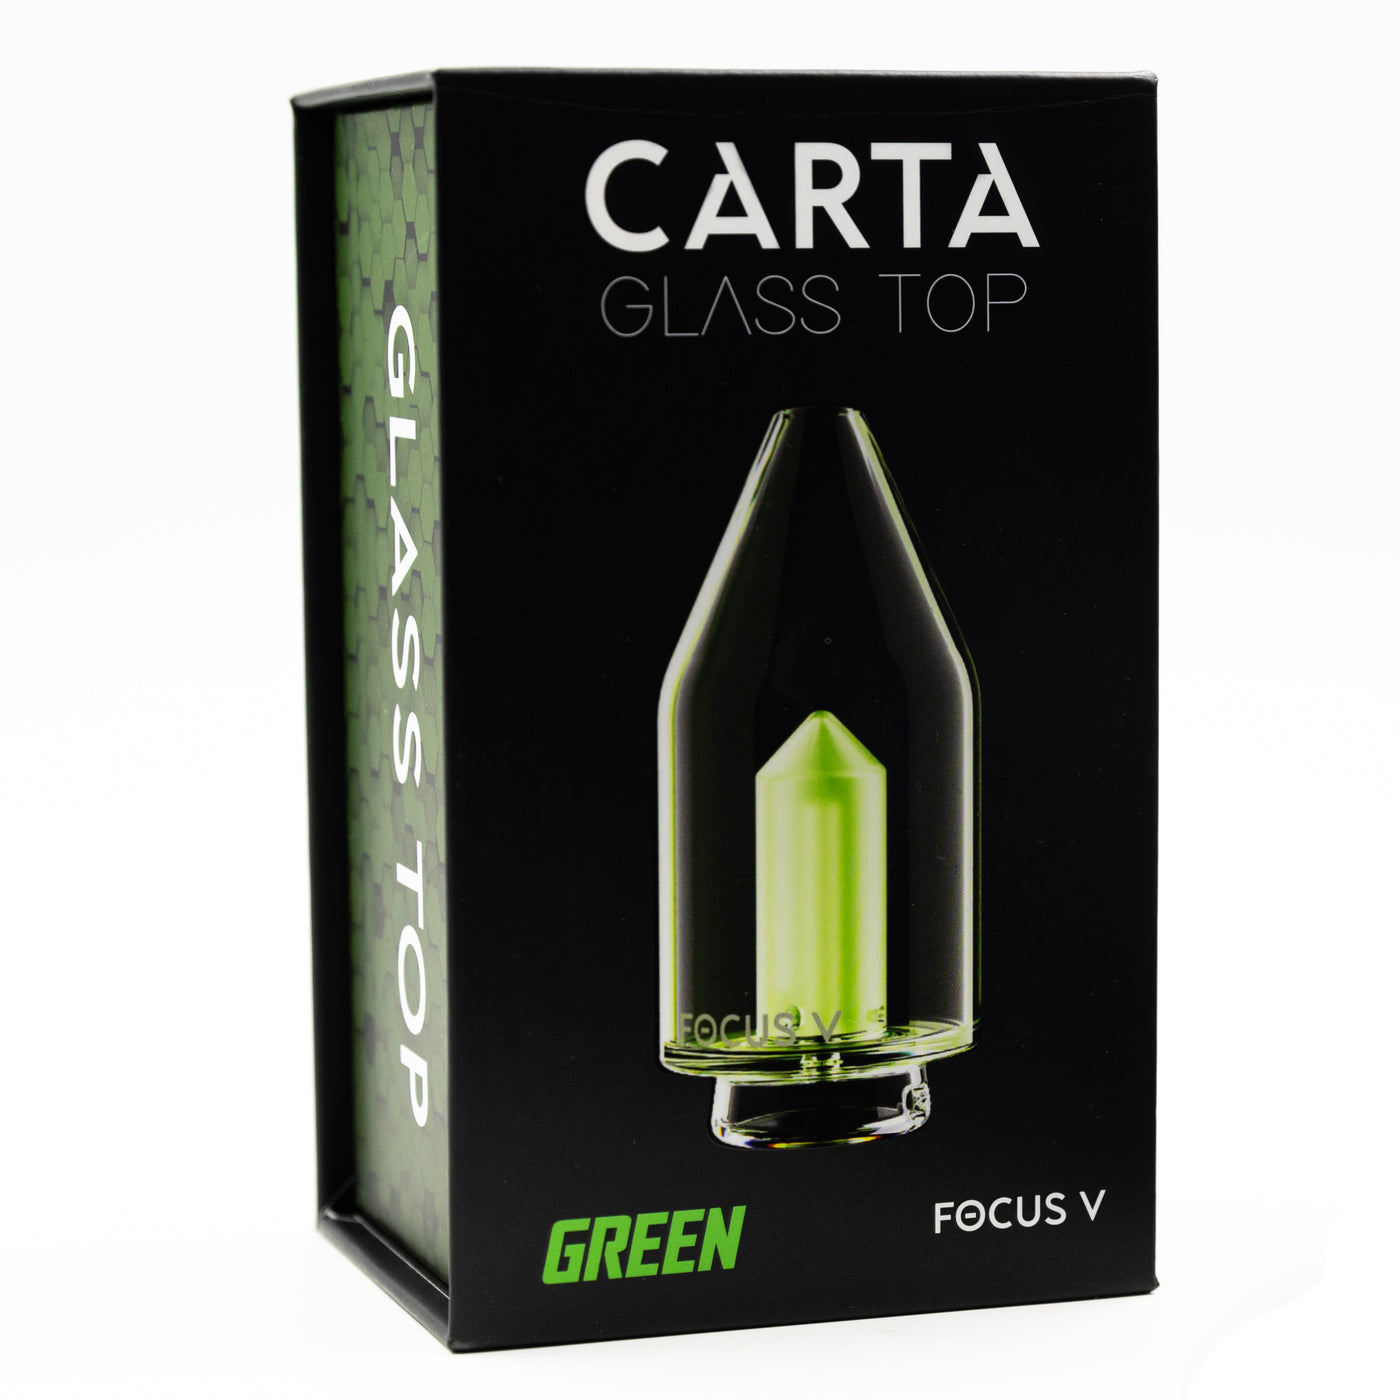 Glass Top - Green - CARTA / CARTA 2